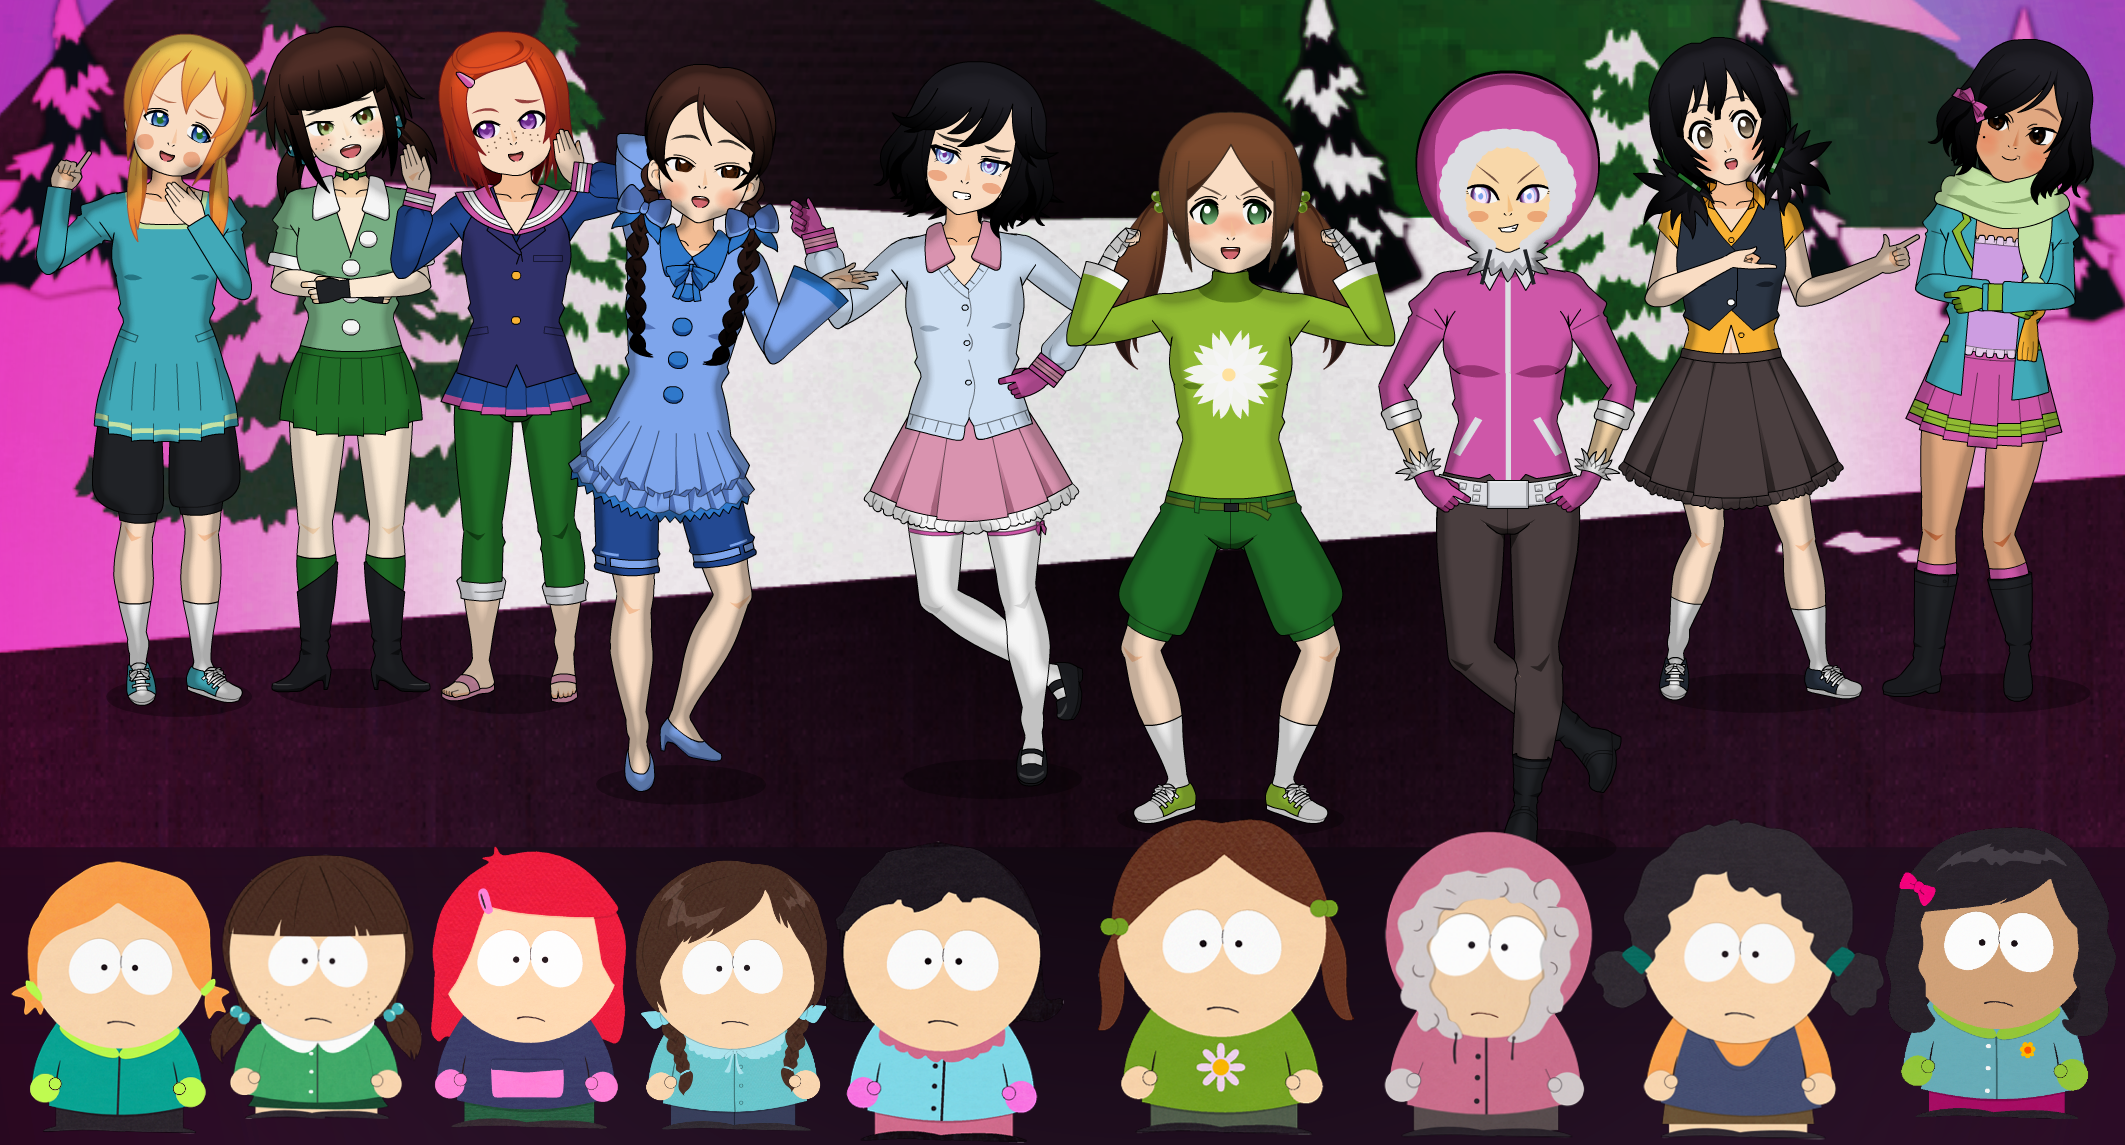 South Park Girlfriends Azaleas Dolls Style by TheLuLu99 on DeviantArt